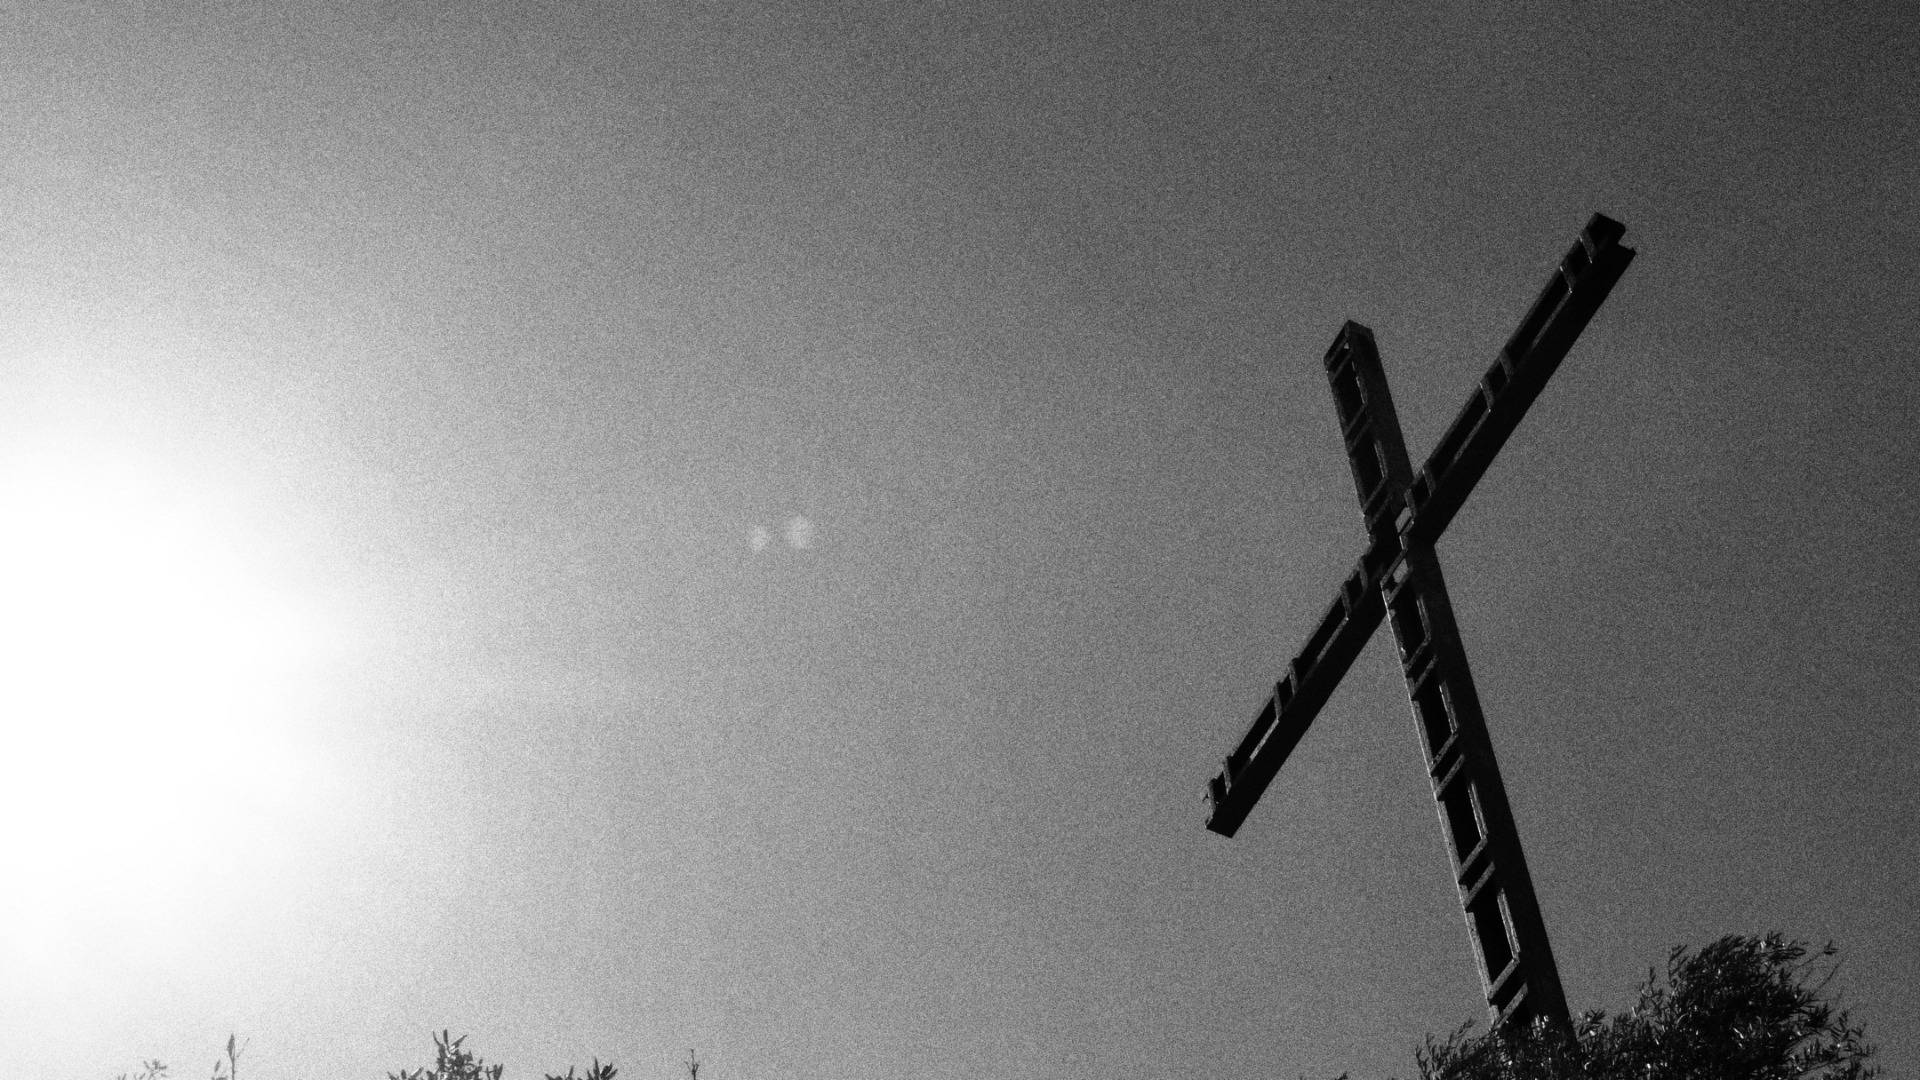 The cross, I captured it in b/w